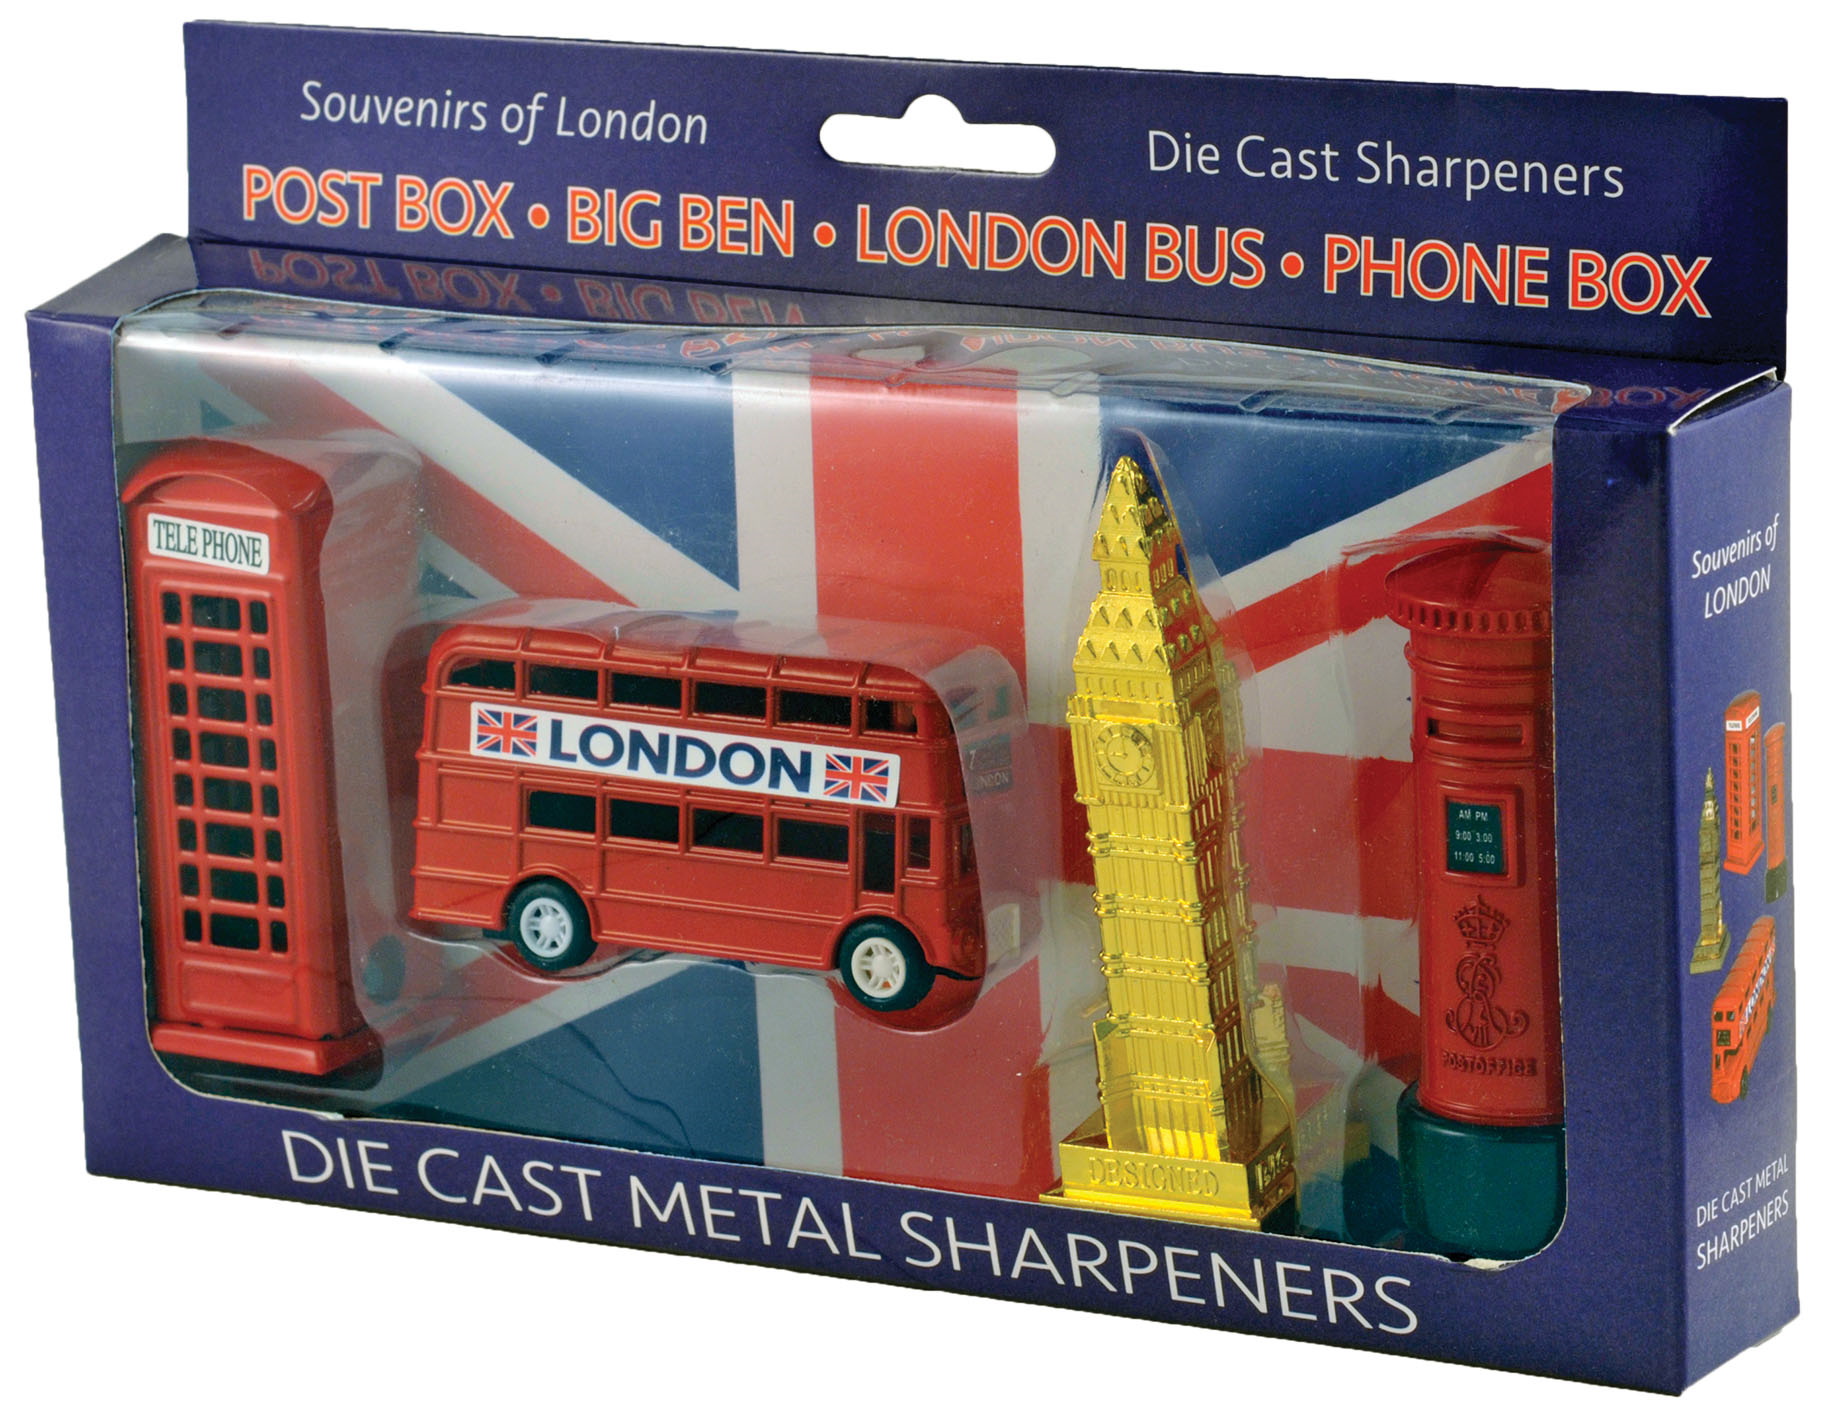 5 London Souvenir Bus Telephone Big Ben Sharpener Die-Cast Metal ENGLAND UK Gift 